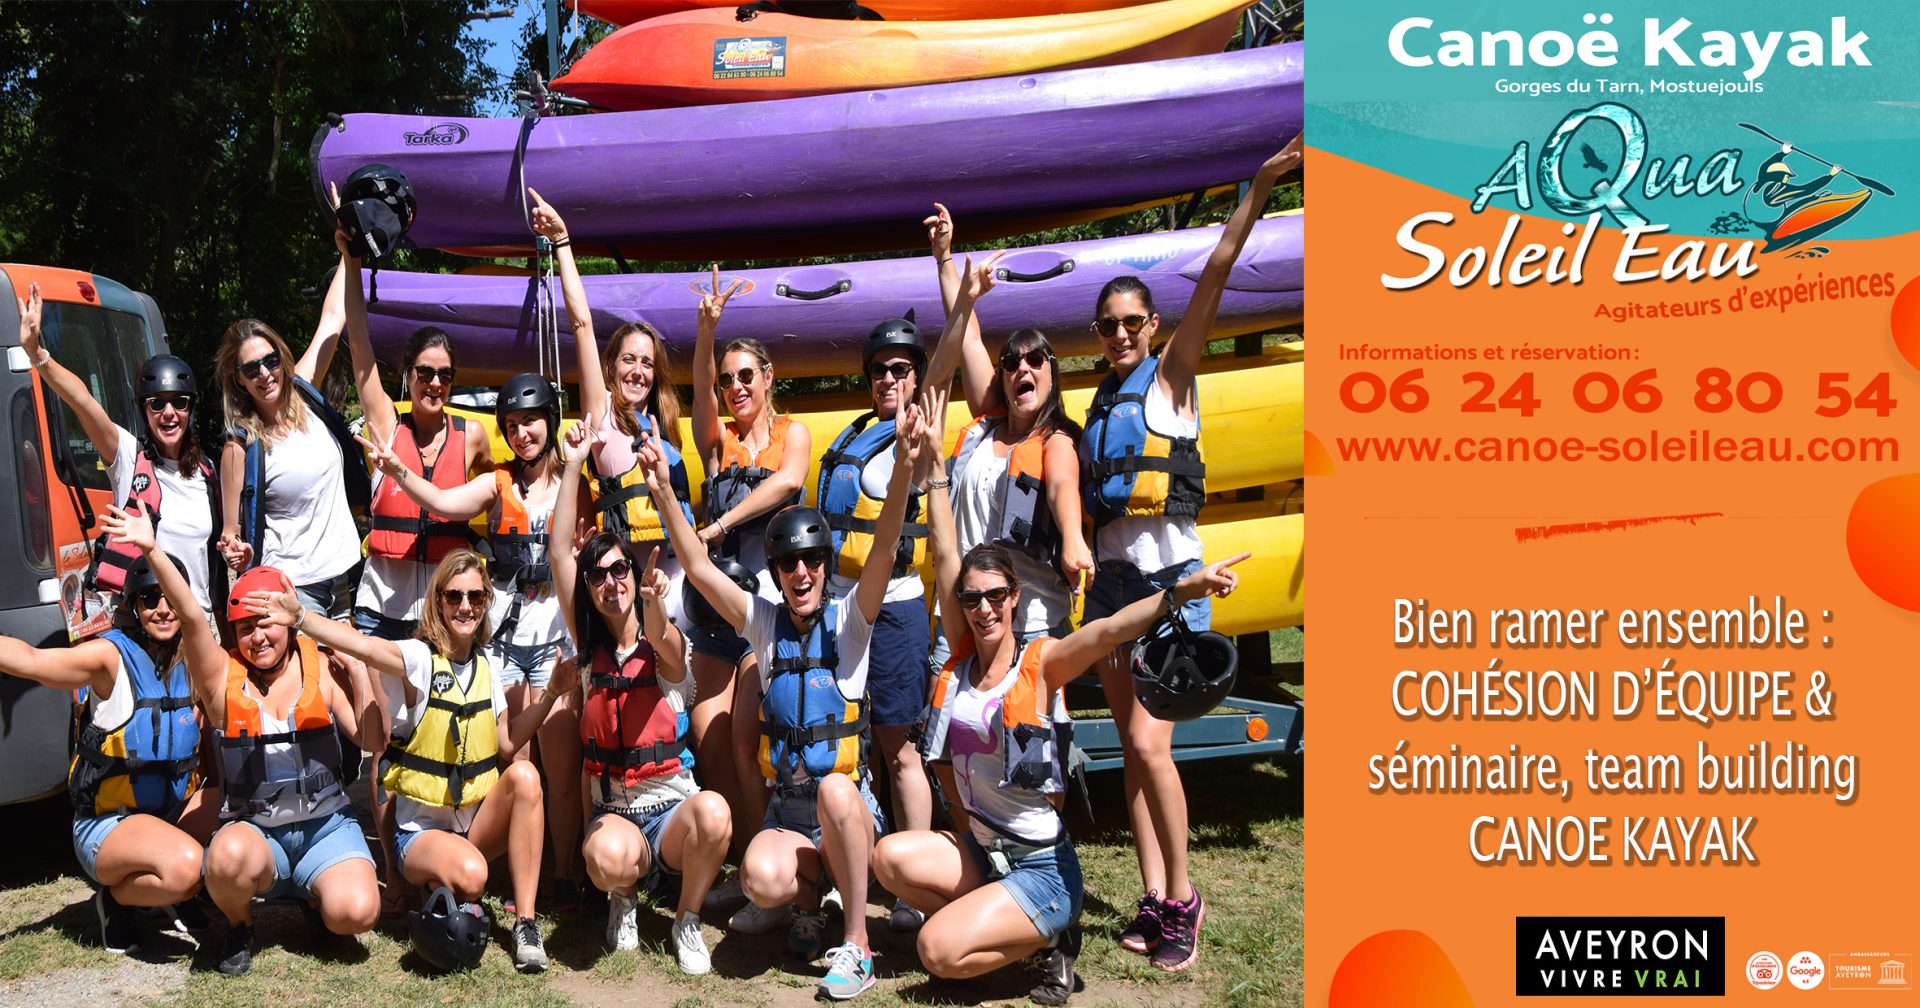 séminaire team building canoe kayak avec Aqua Soleil Eau canoe